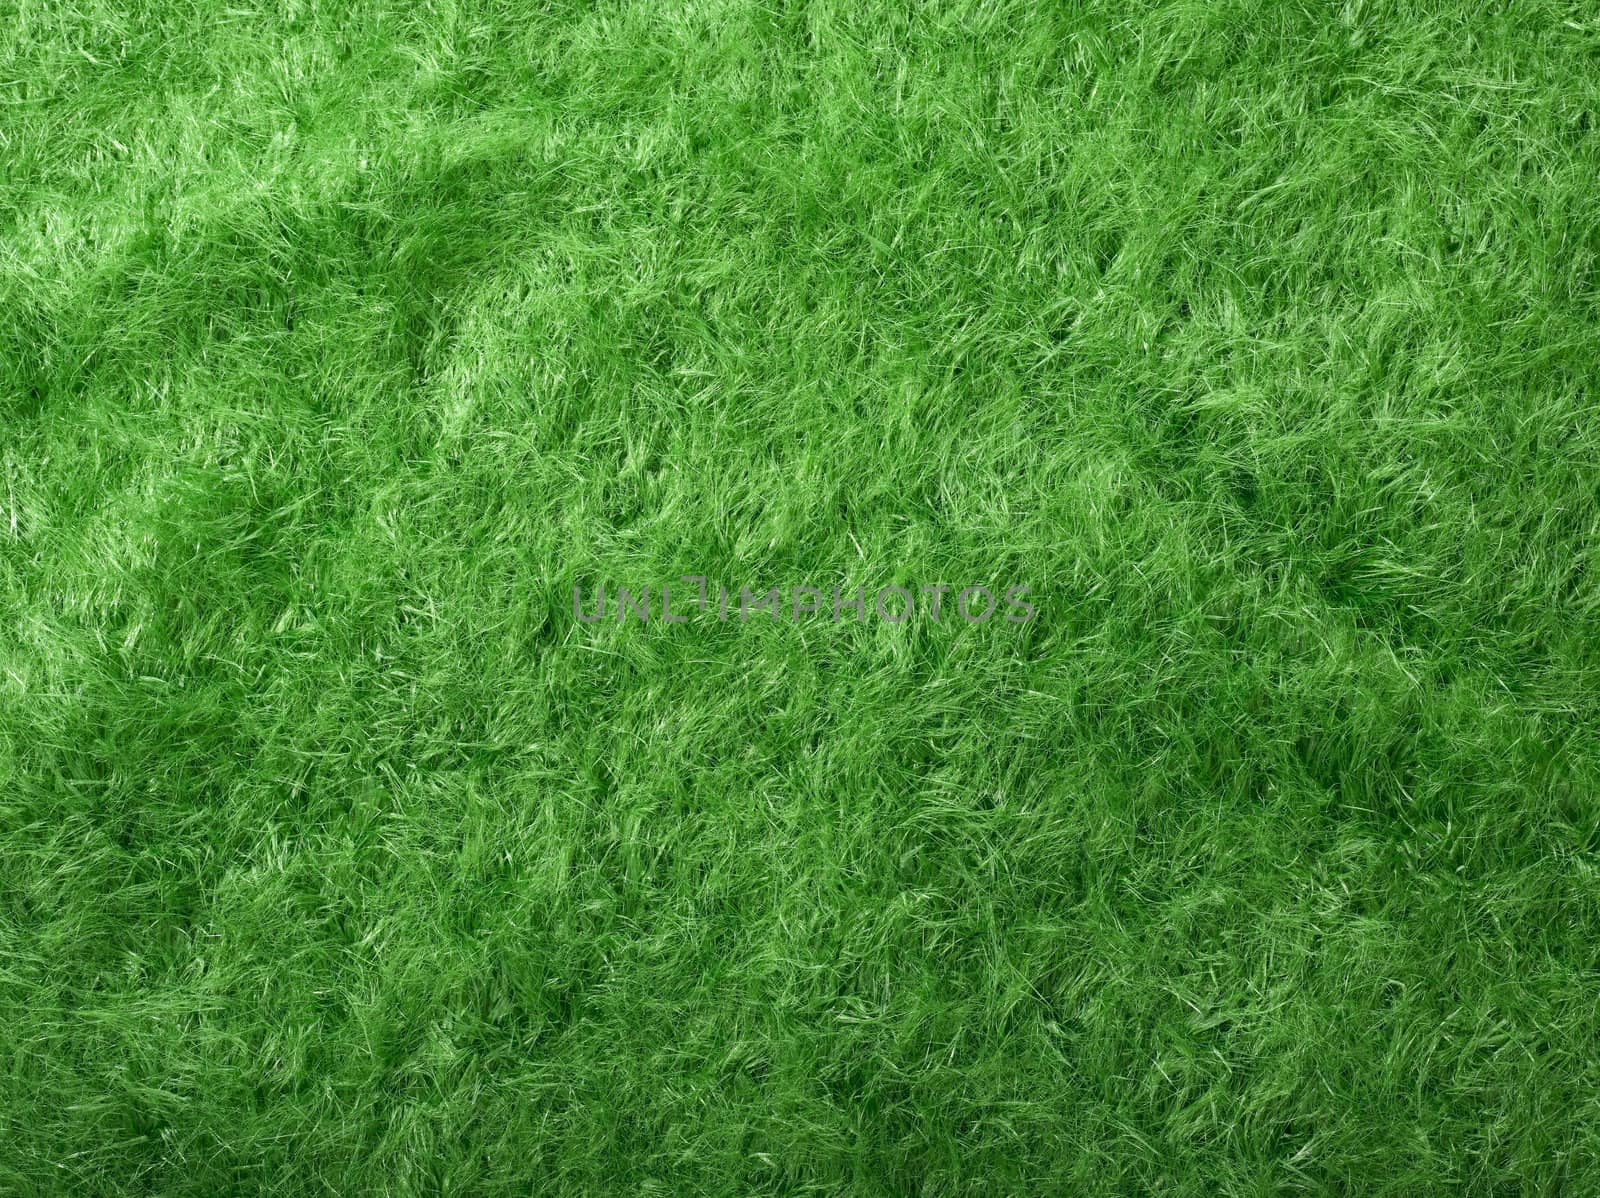 fake grass by pbombaert